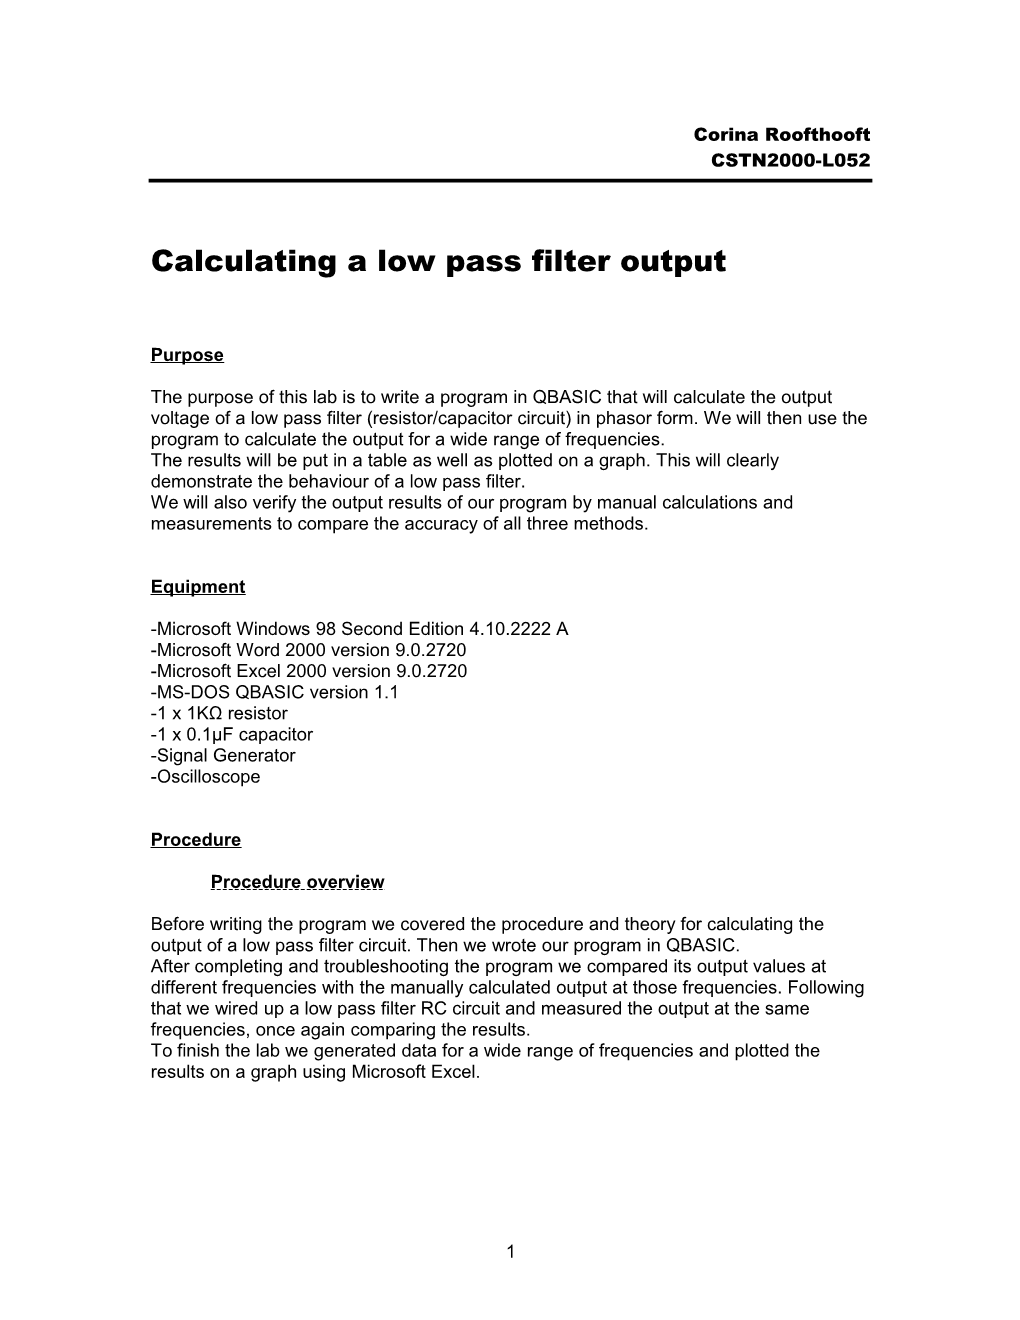 Calculating a Low Pass Filter Output